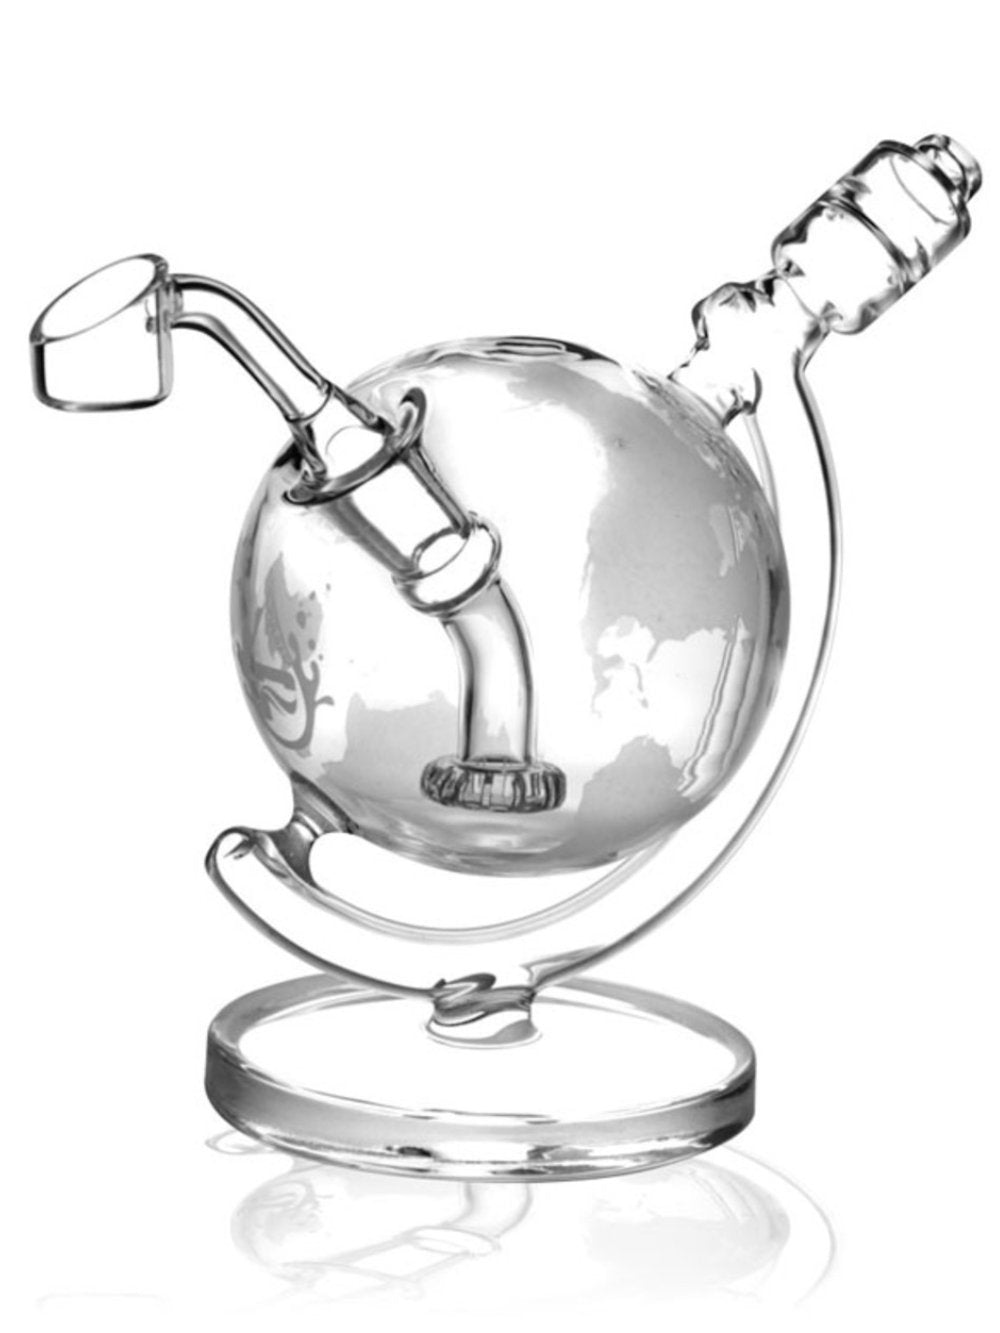 Atlas Globe Dab Rig Pulsar Fat Buddha Glass